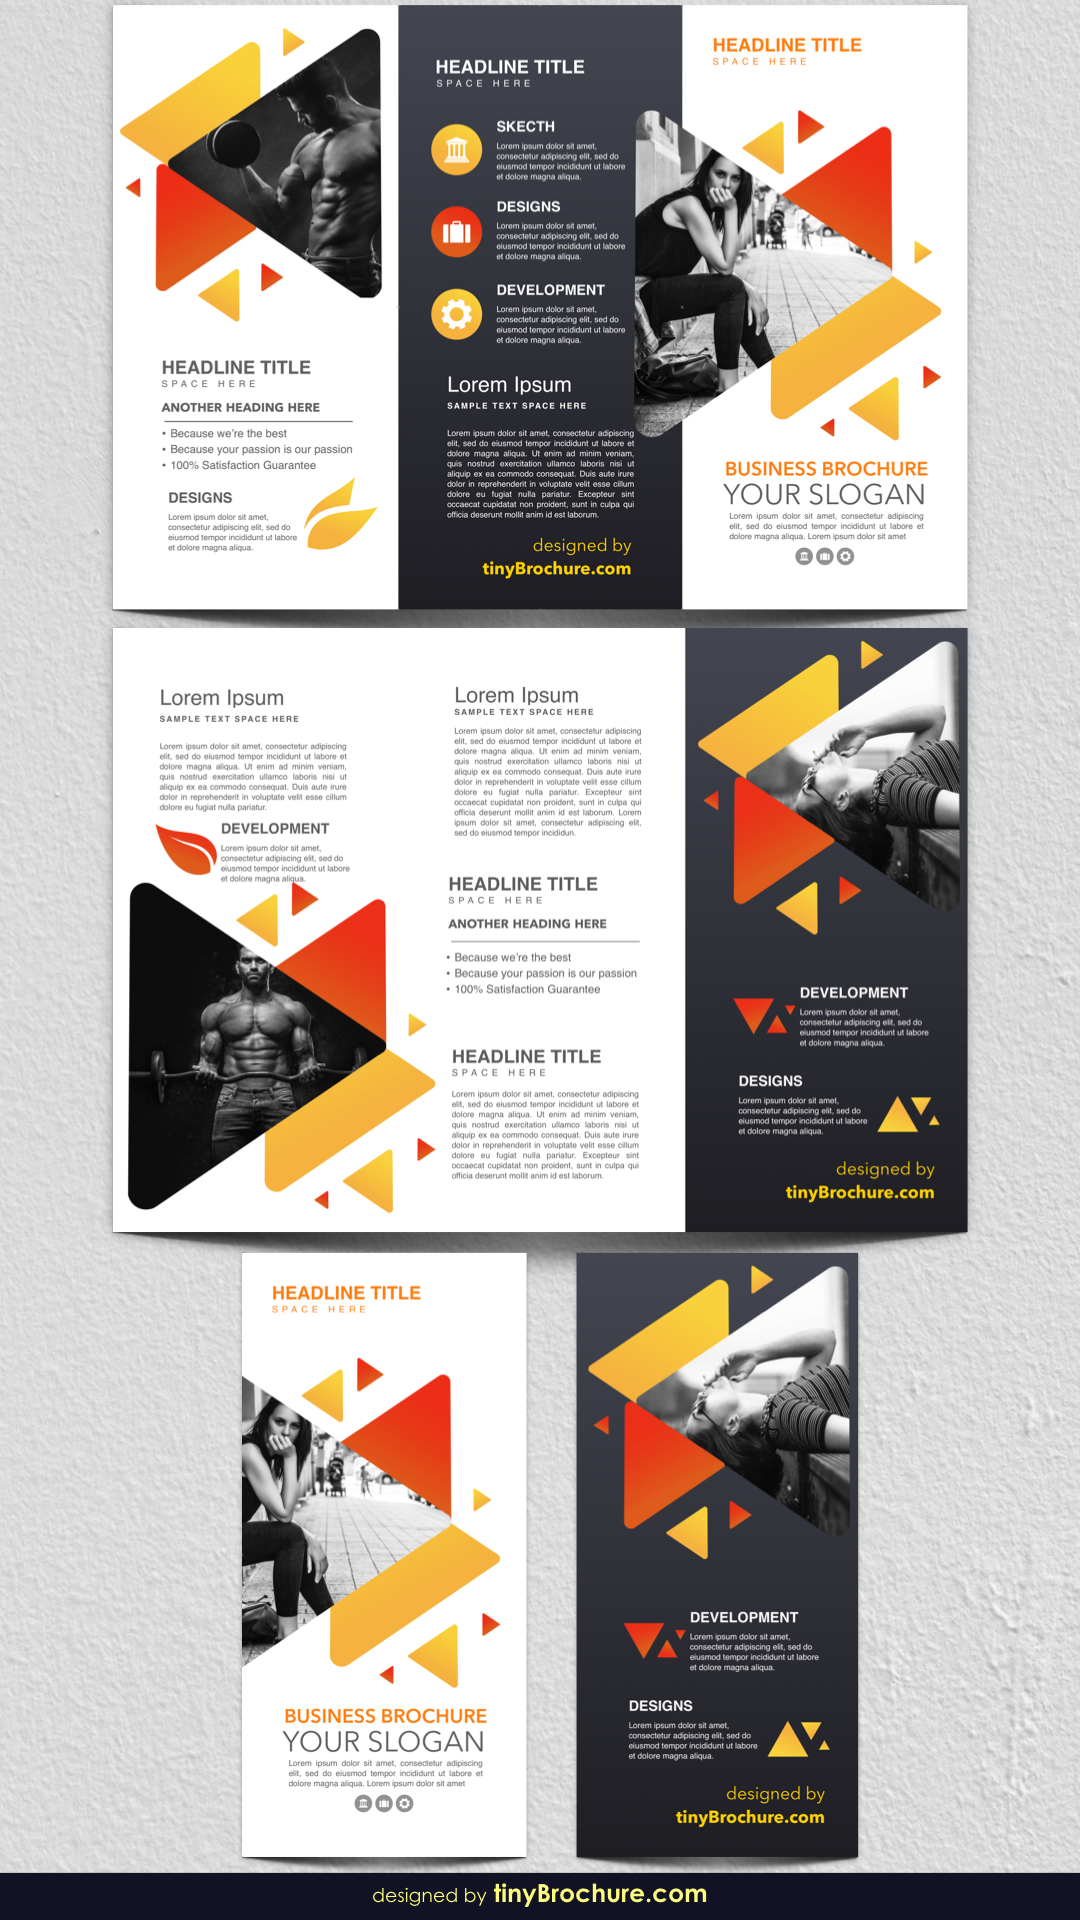 3 Panel Brochure Template Google Docs 2019 | Graphic Design With Regard To Three Panel Brochure Template